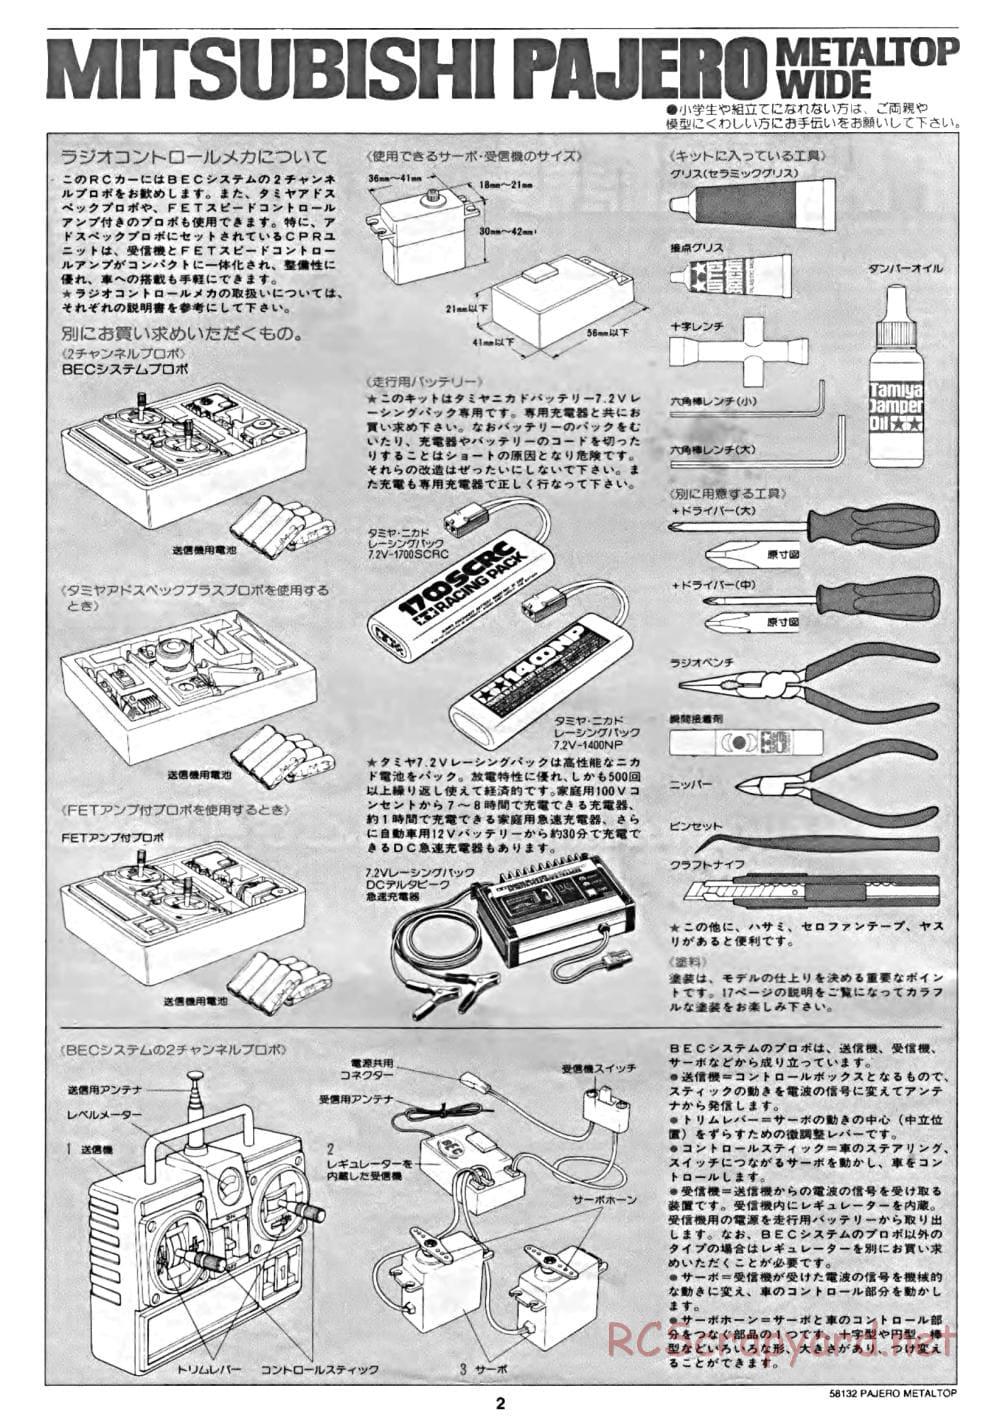 Tamiya - Mitsubishi Pajero Metaltop Wide - CC-01 Chassis - Manual - Page 2